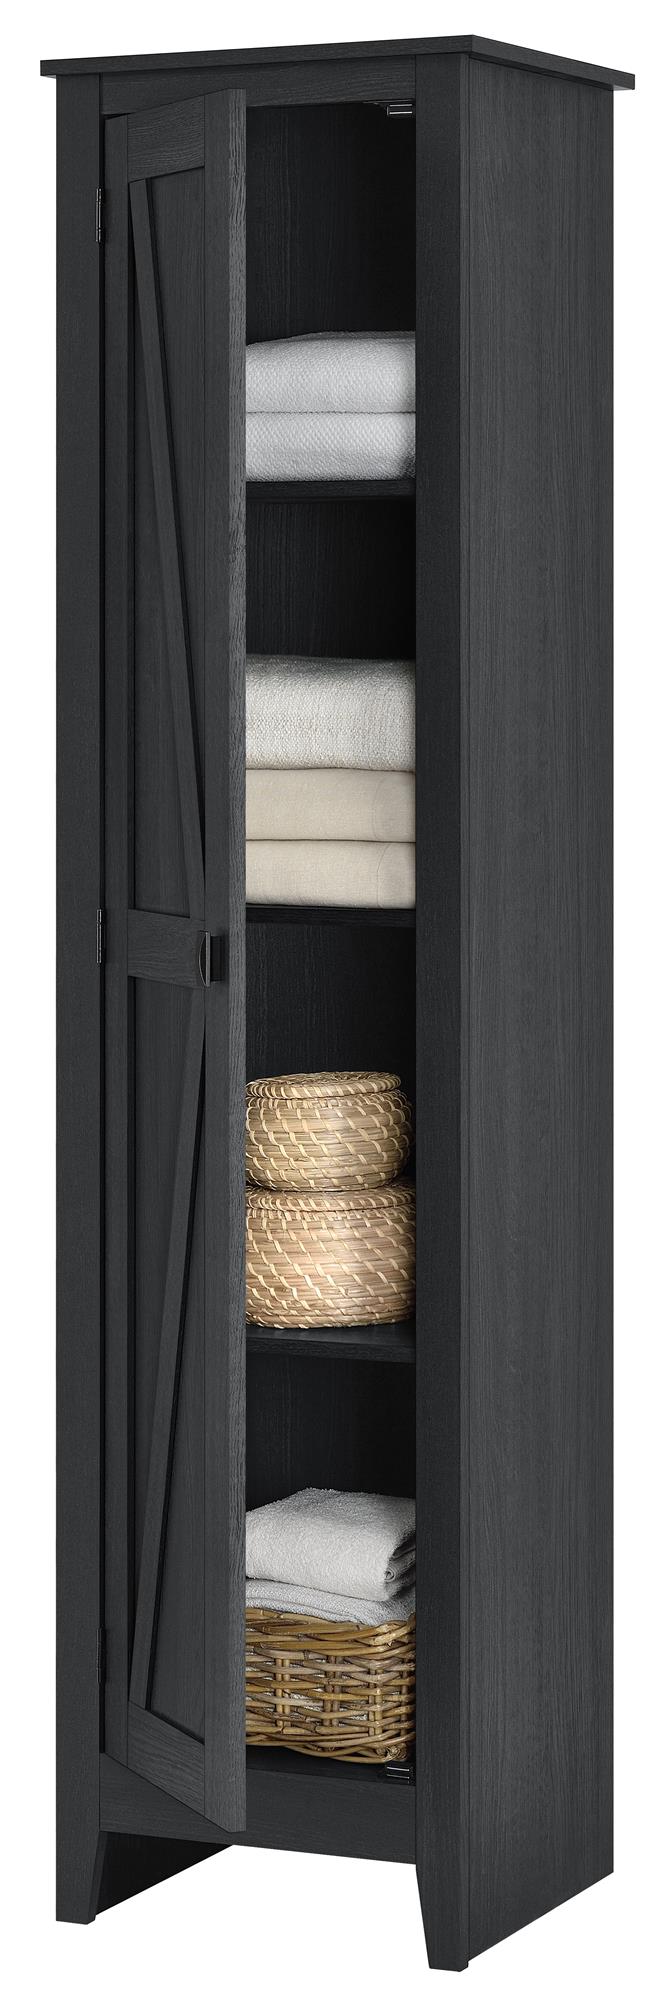 Organize in style with Farmington rustic farmhouse cabinet -  Black Oak